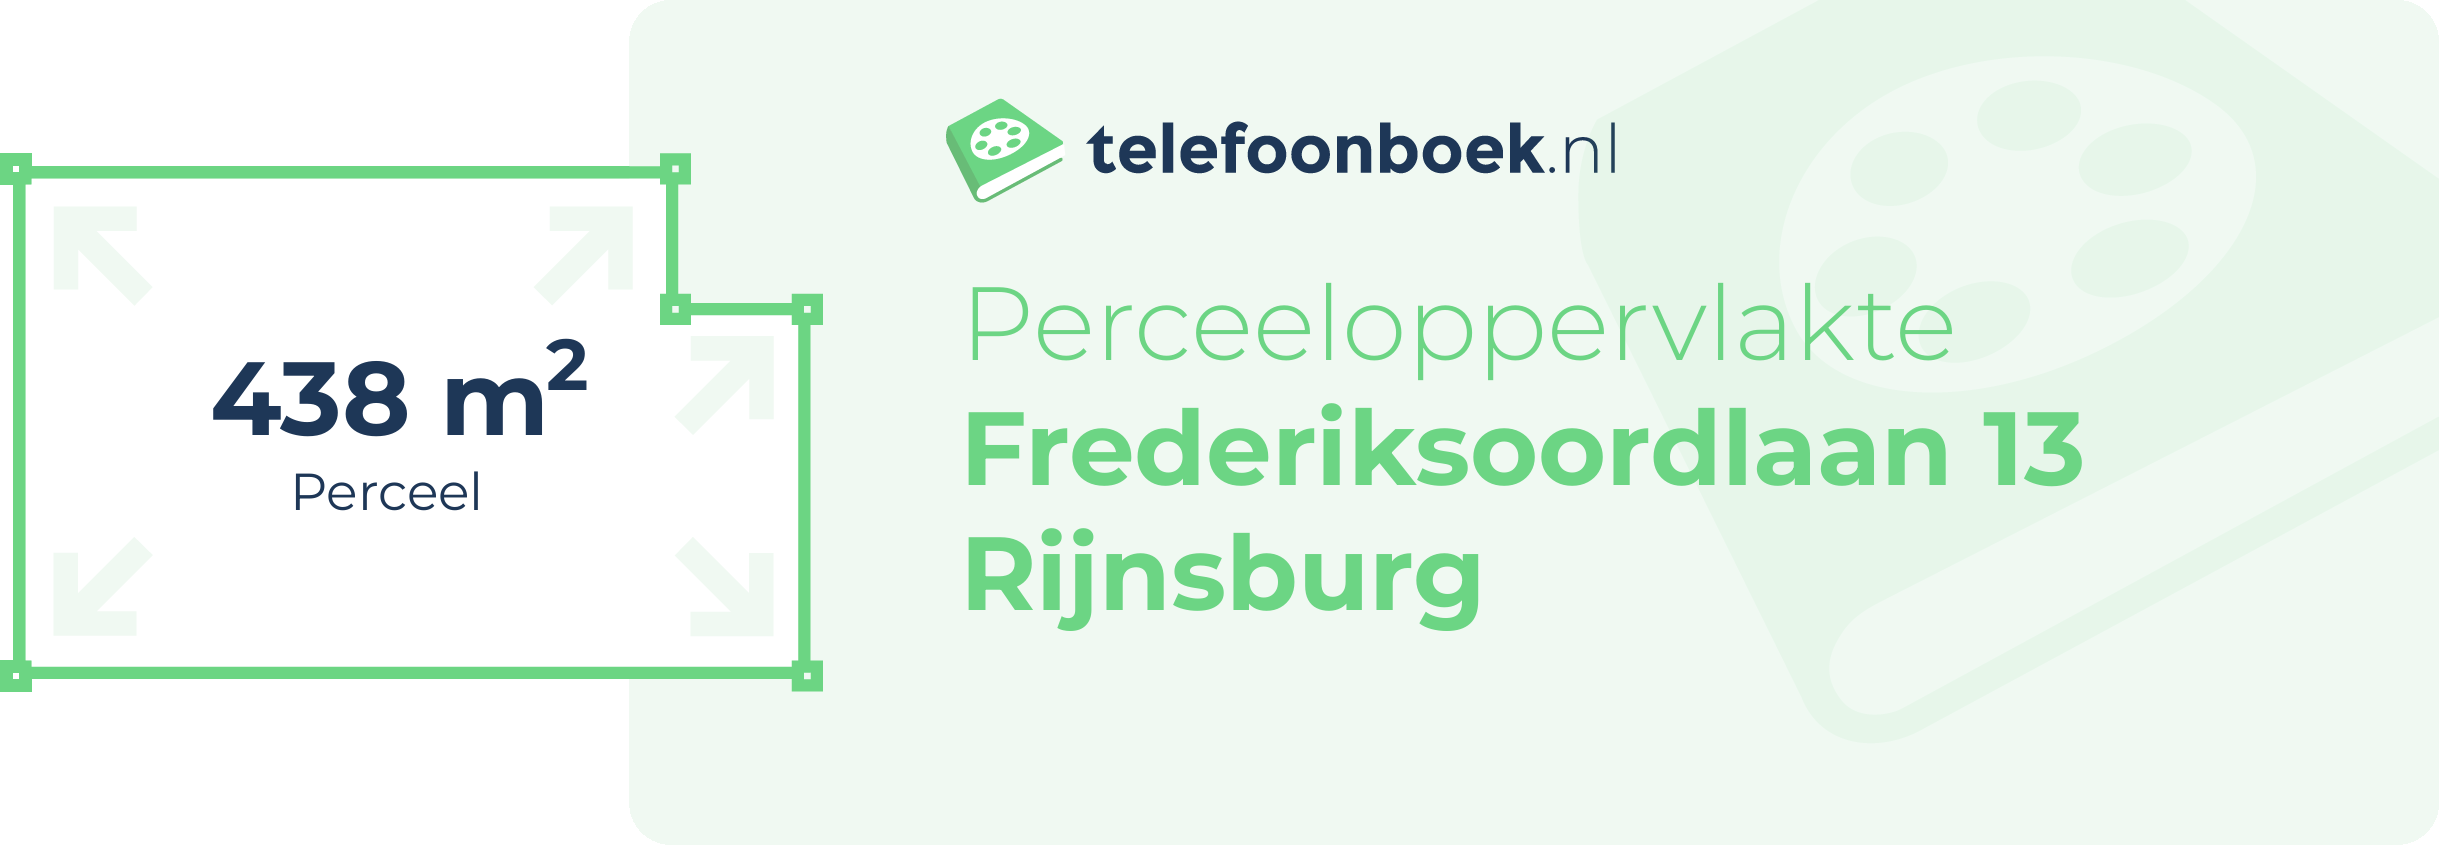 Perceeloppervlakte Frederiksoordlaan 13 Rijnsburg